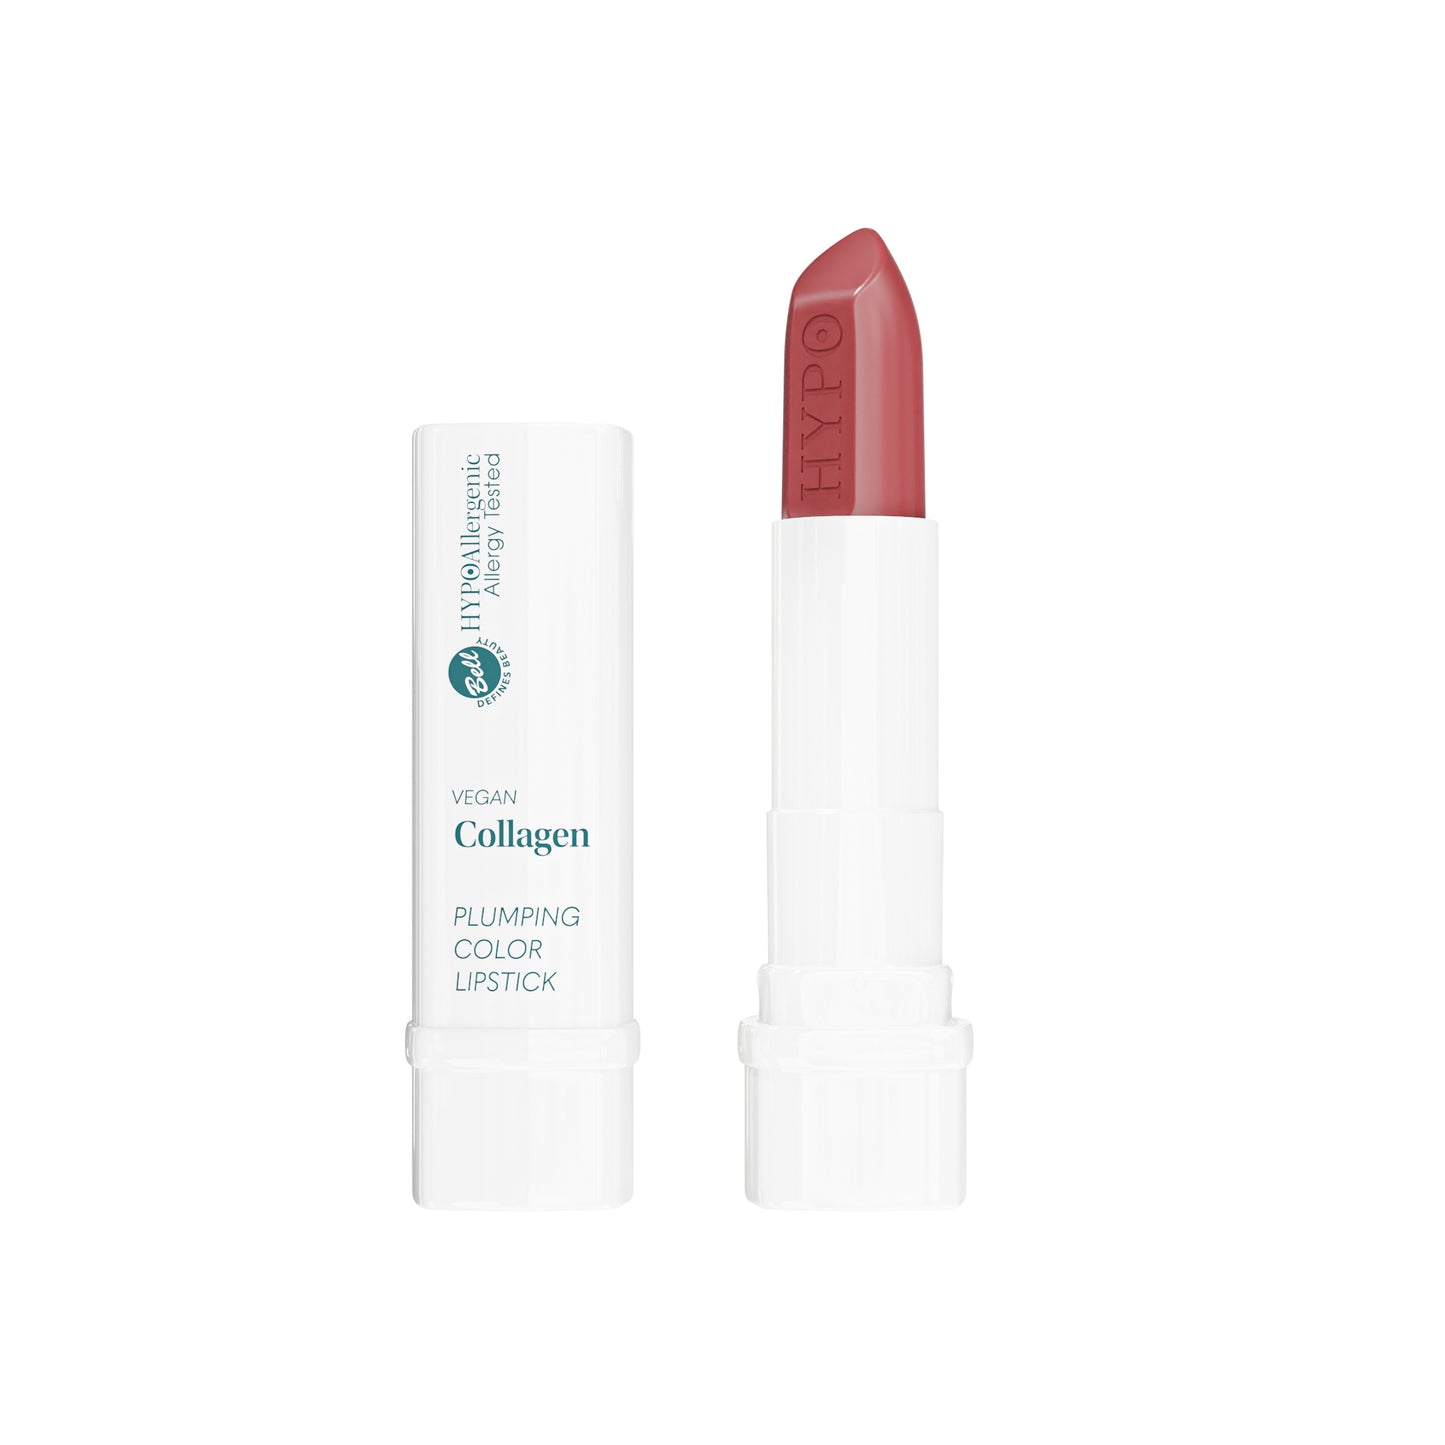 Vegan Collagen Plumping Color Lipstick 01 Choco